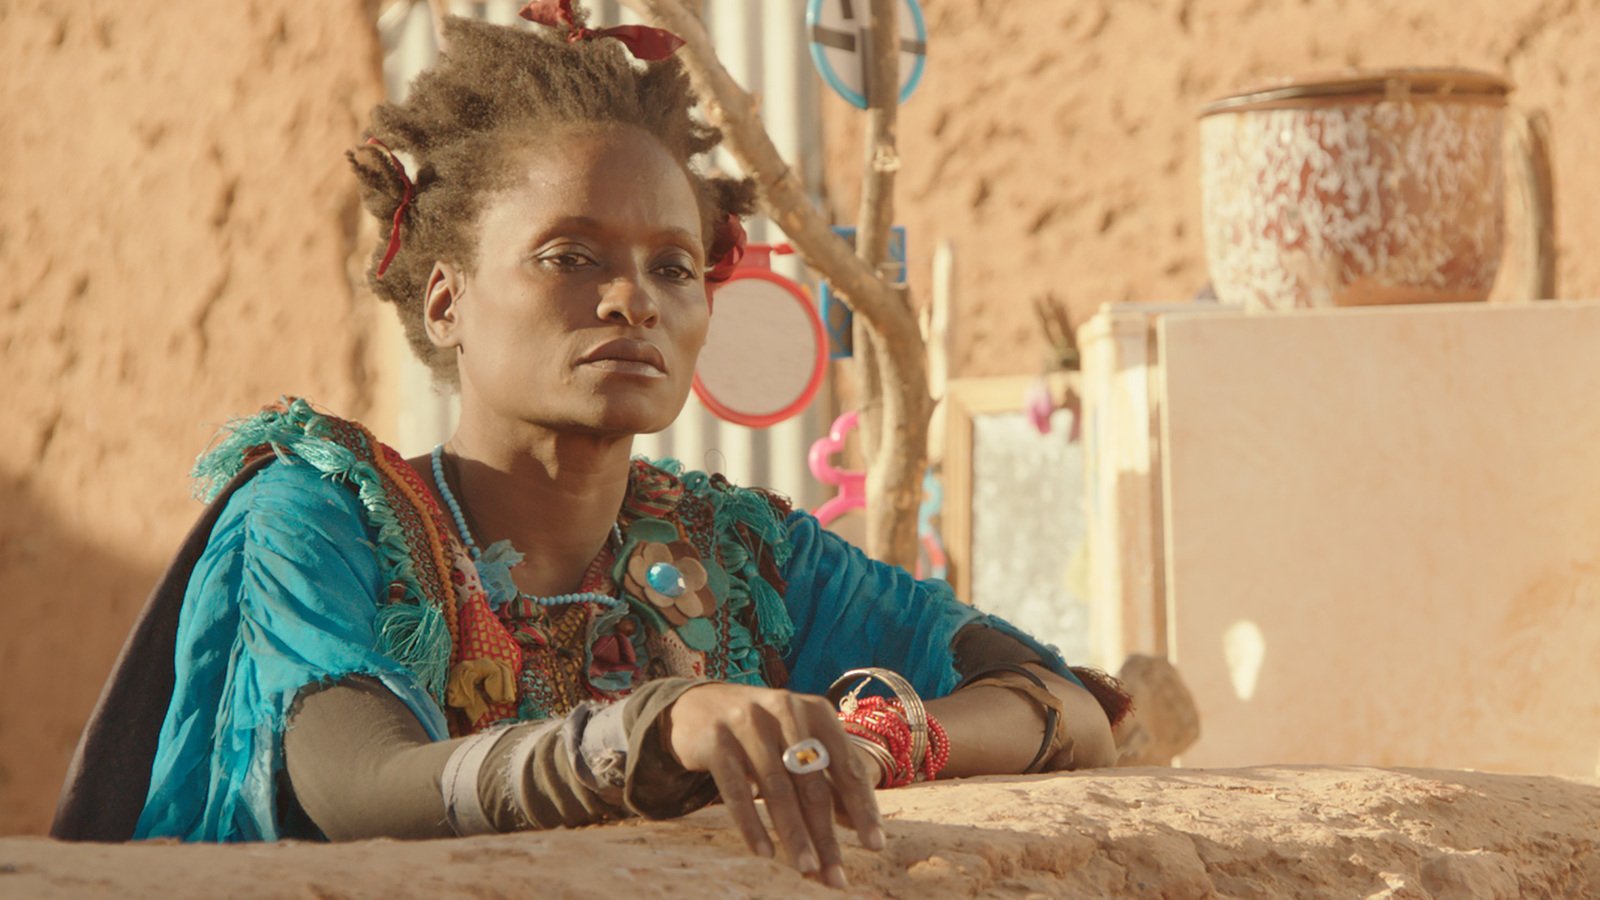 The New Archaic. A screening of Timbuktu by Abderrahmane Sissako